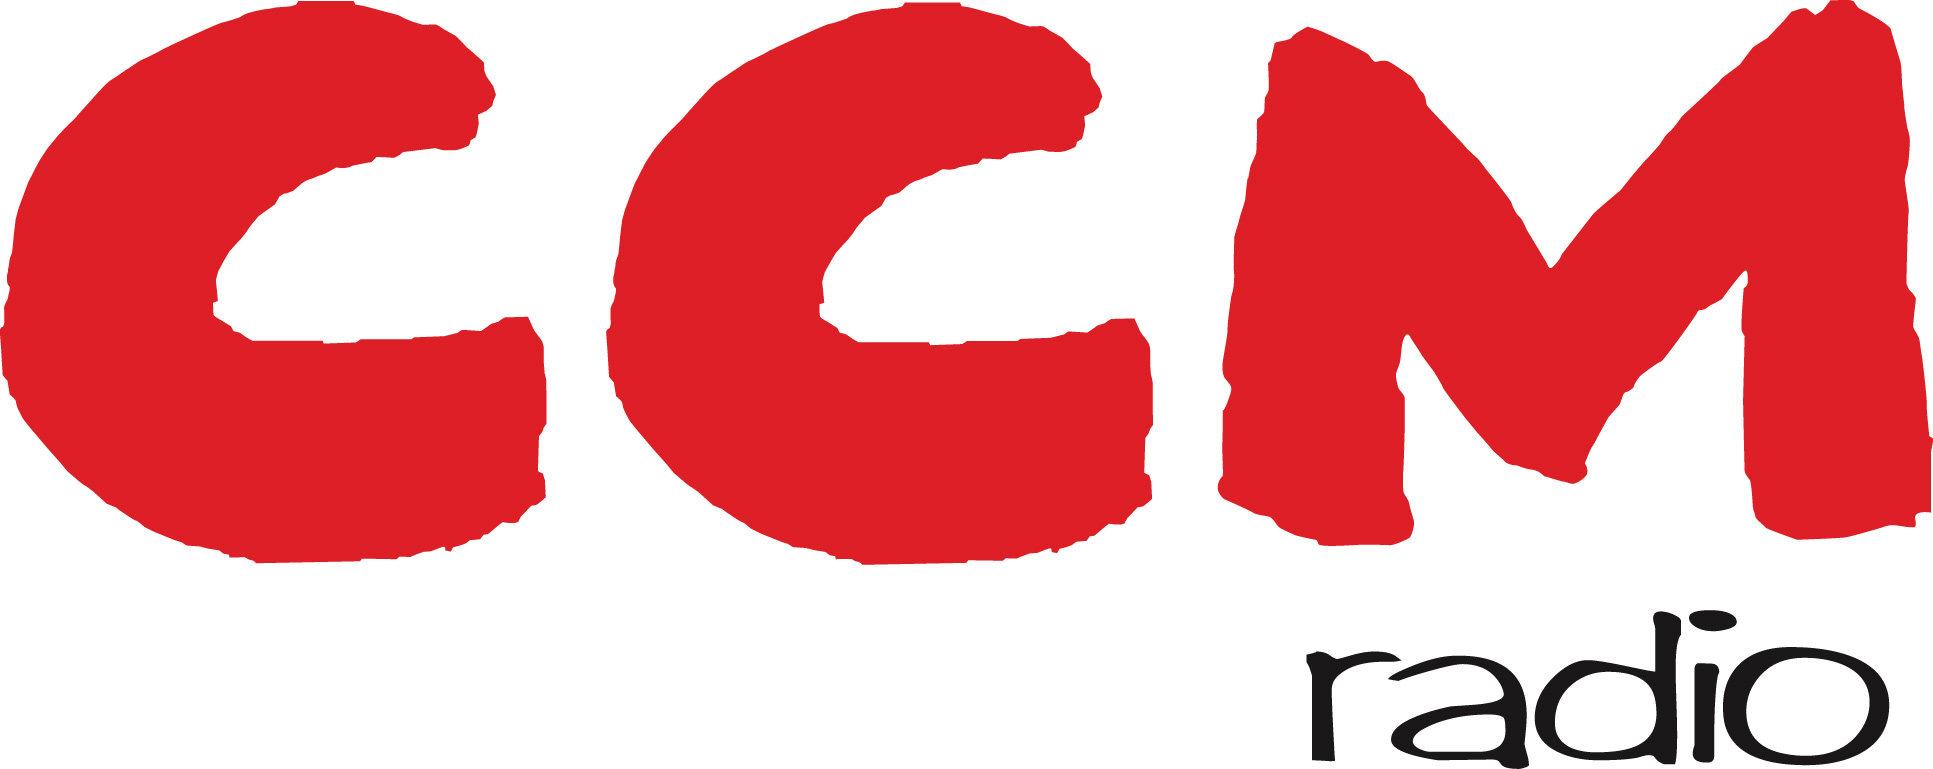 logo ccm jpg